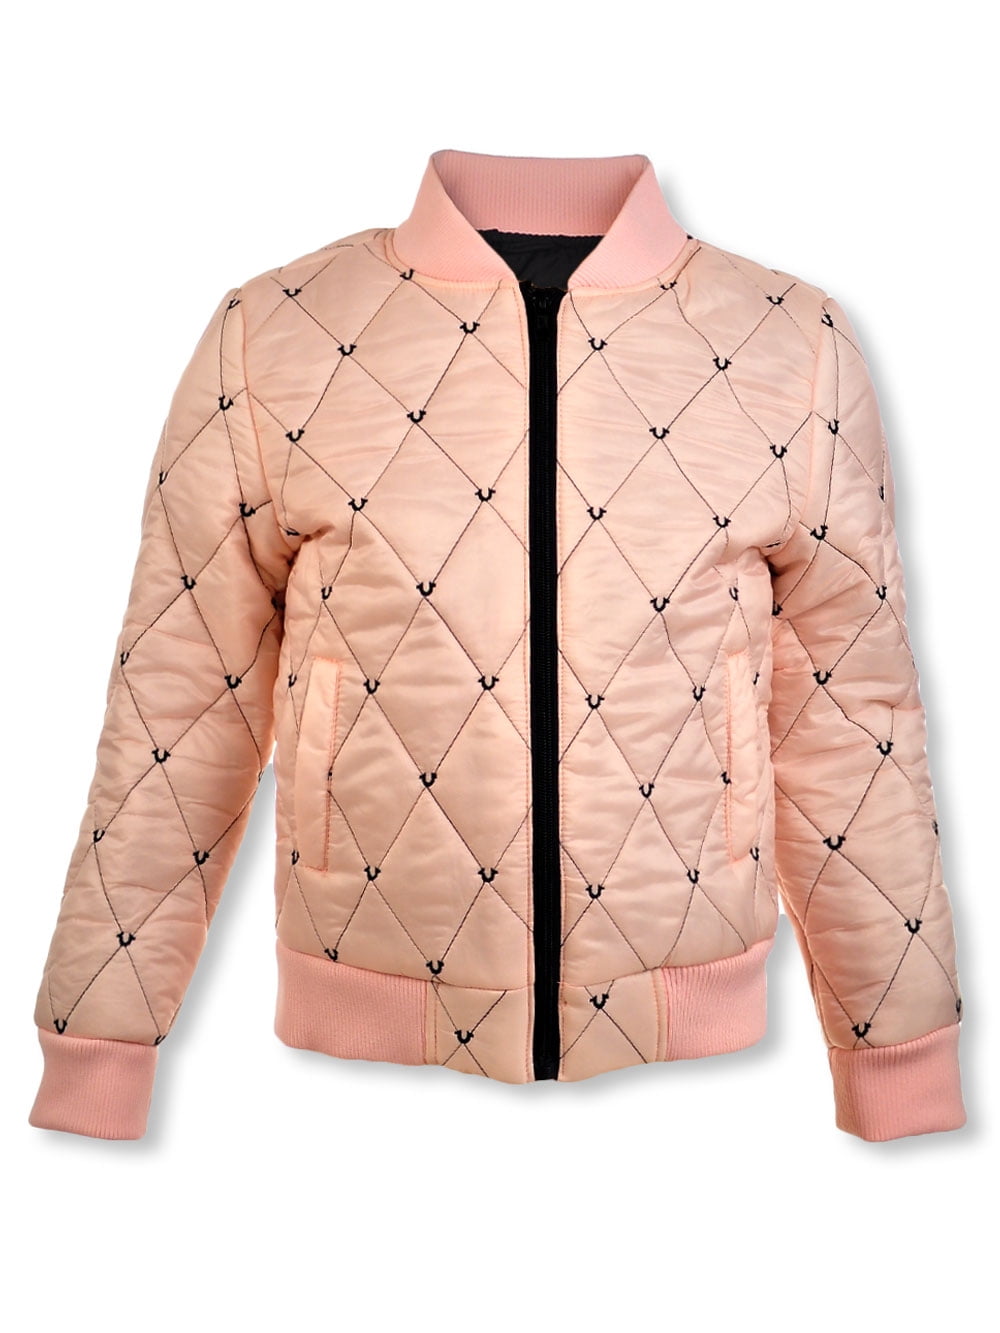 true religion quilted jacket